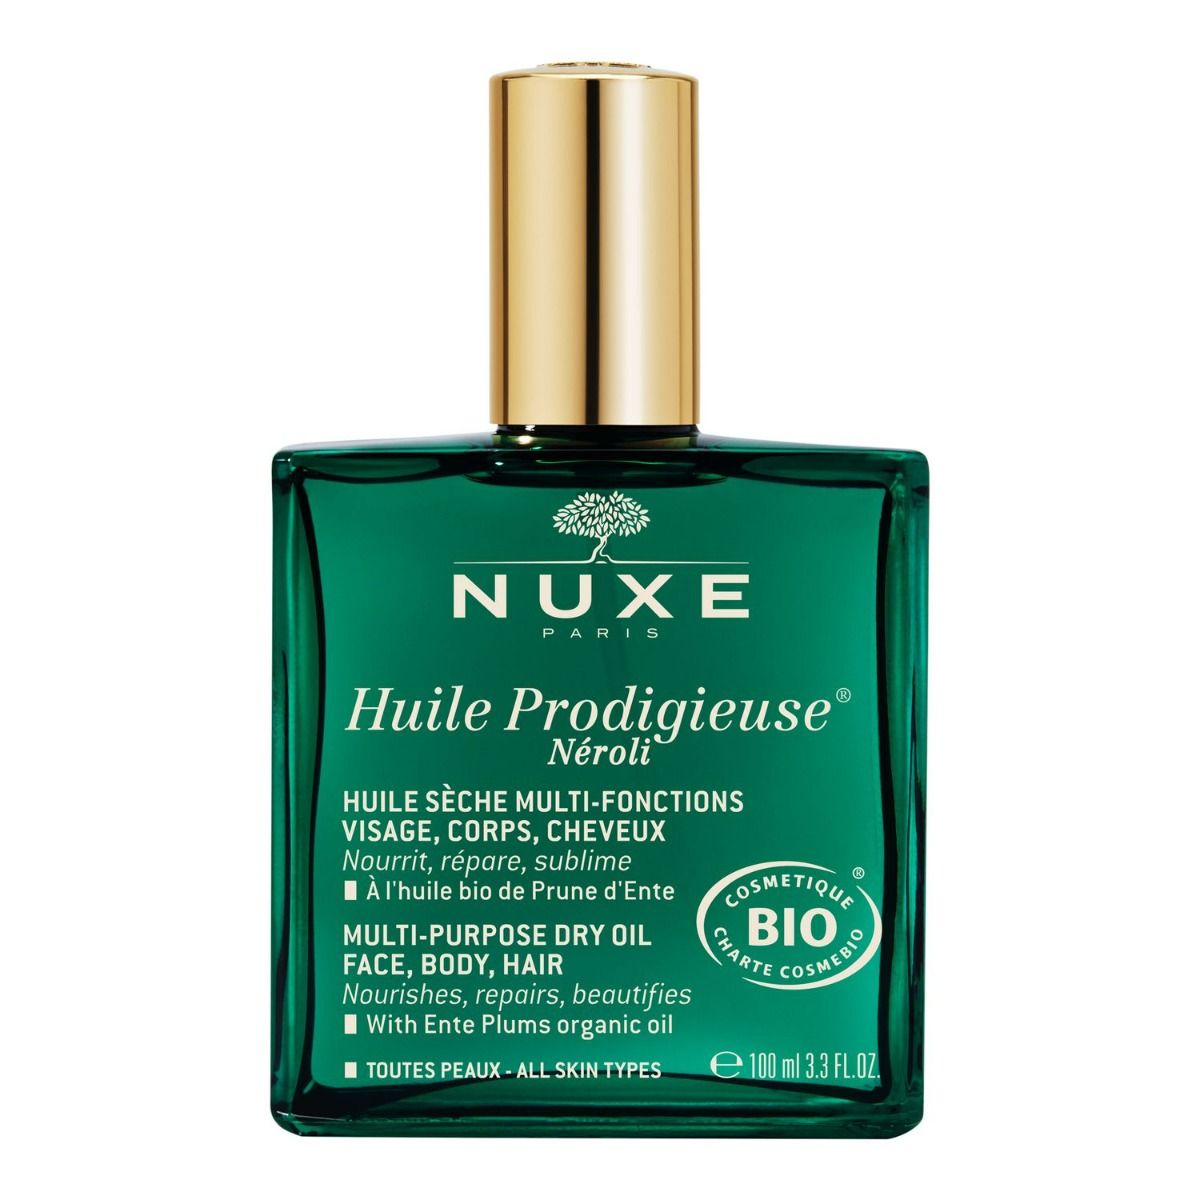 Nuxe Huile Prodigieuse Neroli масло для лица, тела и волос, 100 ml слива этюд prunus domestica 1 шт